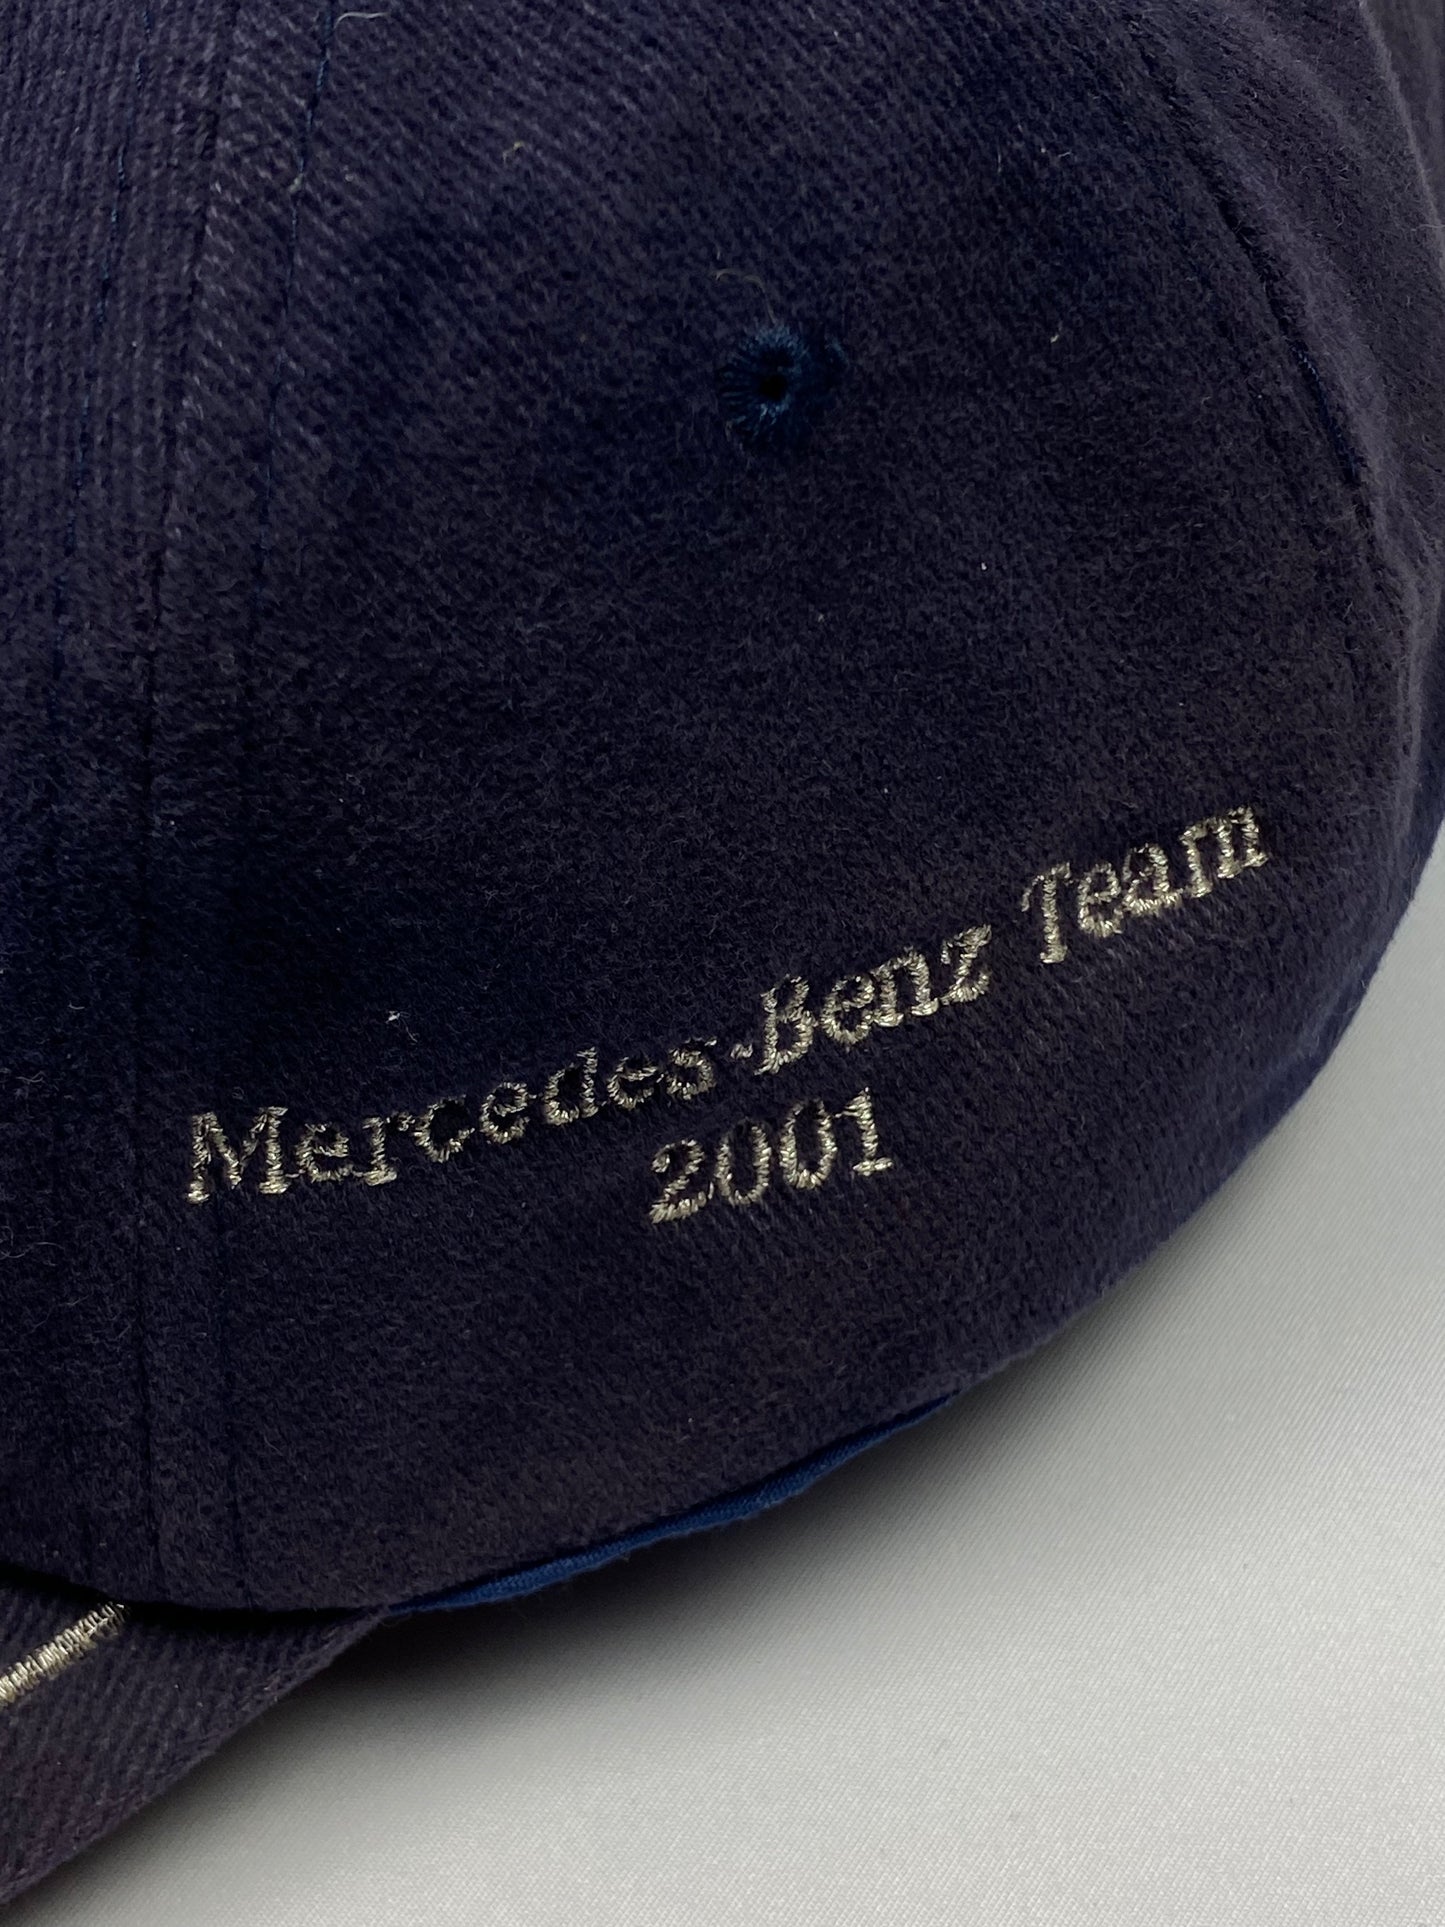 LIMITED EDITION 2001 MERCEDES BENZ MILLE MIGLIA CAP.